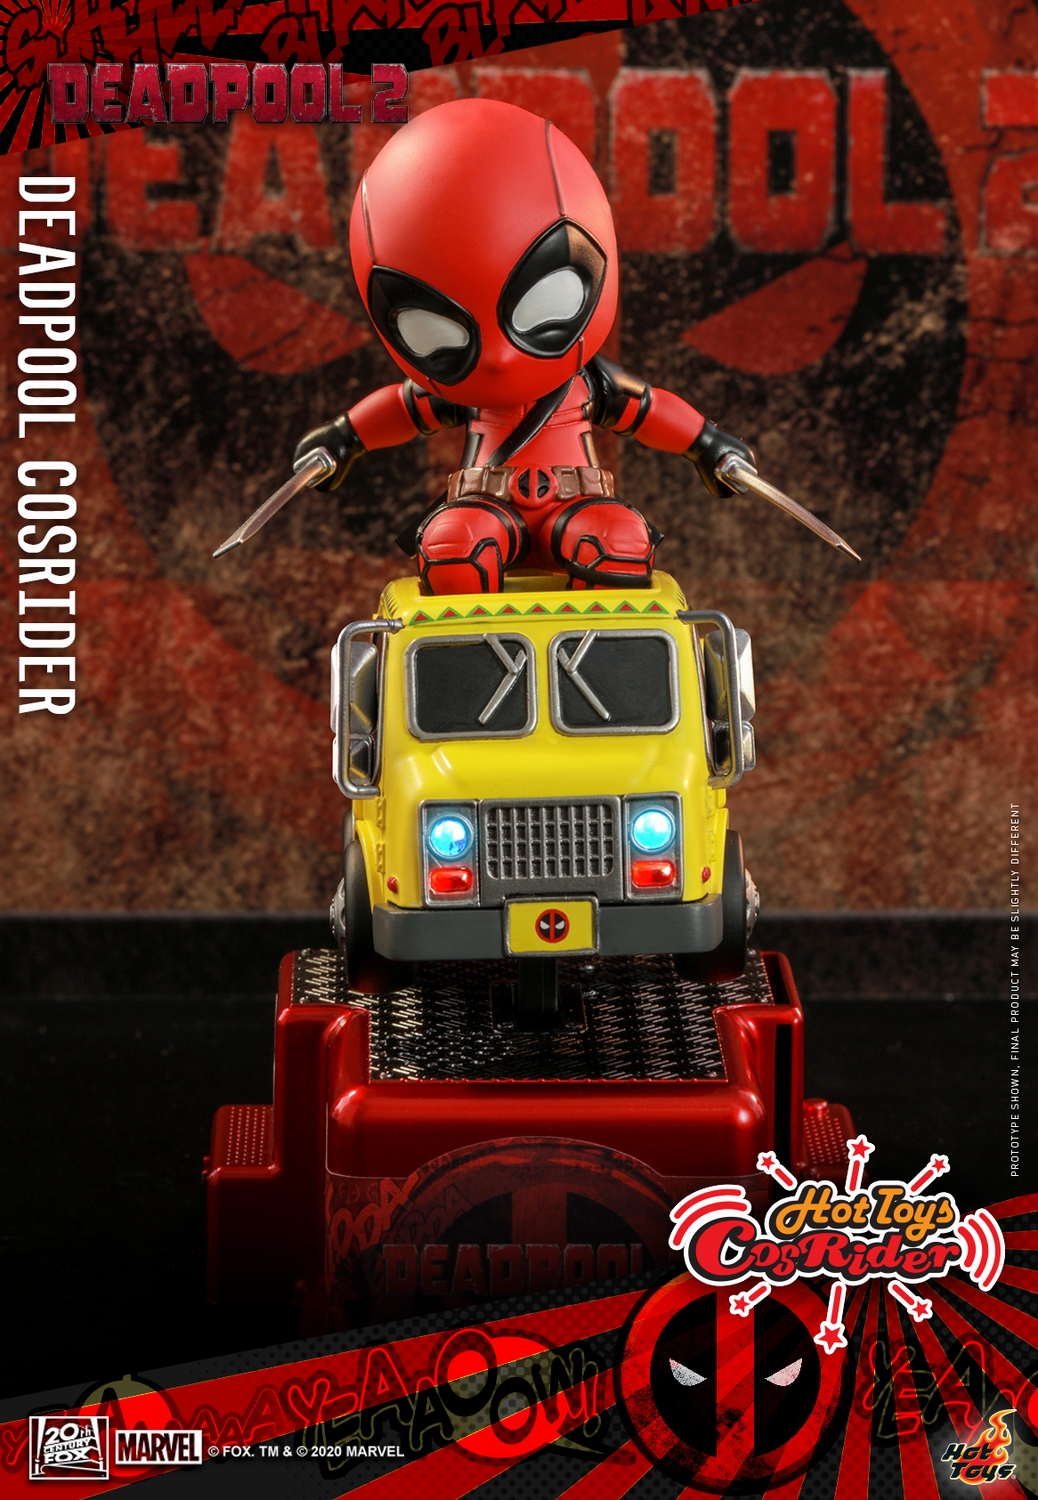 Hot Toys - Deadpool 2 - Deadpool CosRider_PR2.jpg